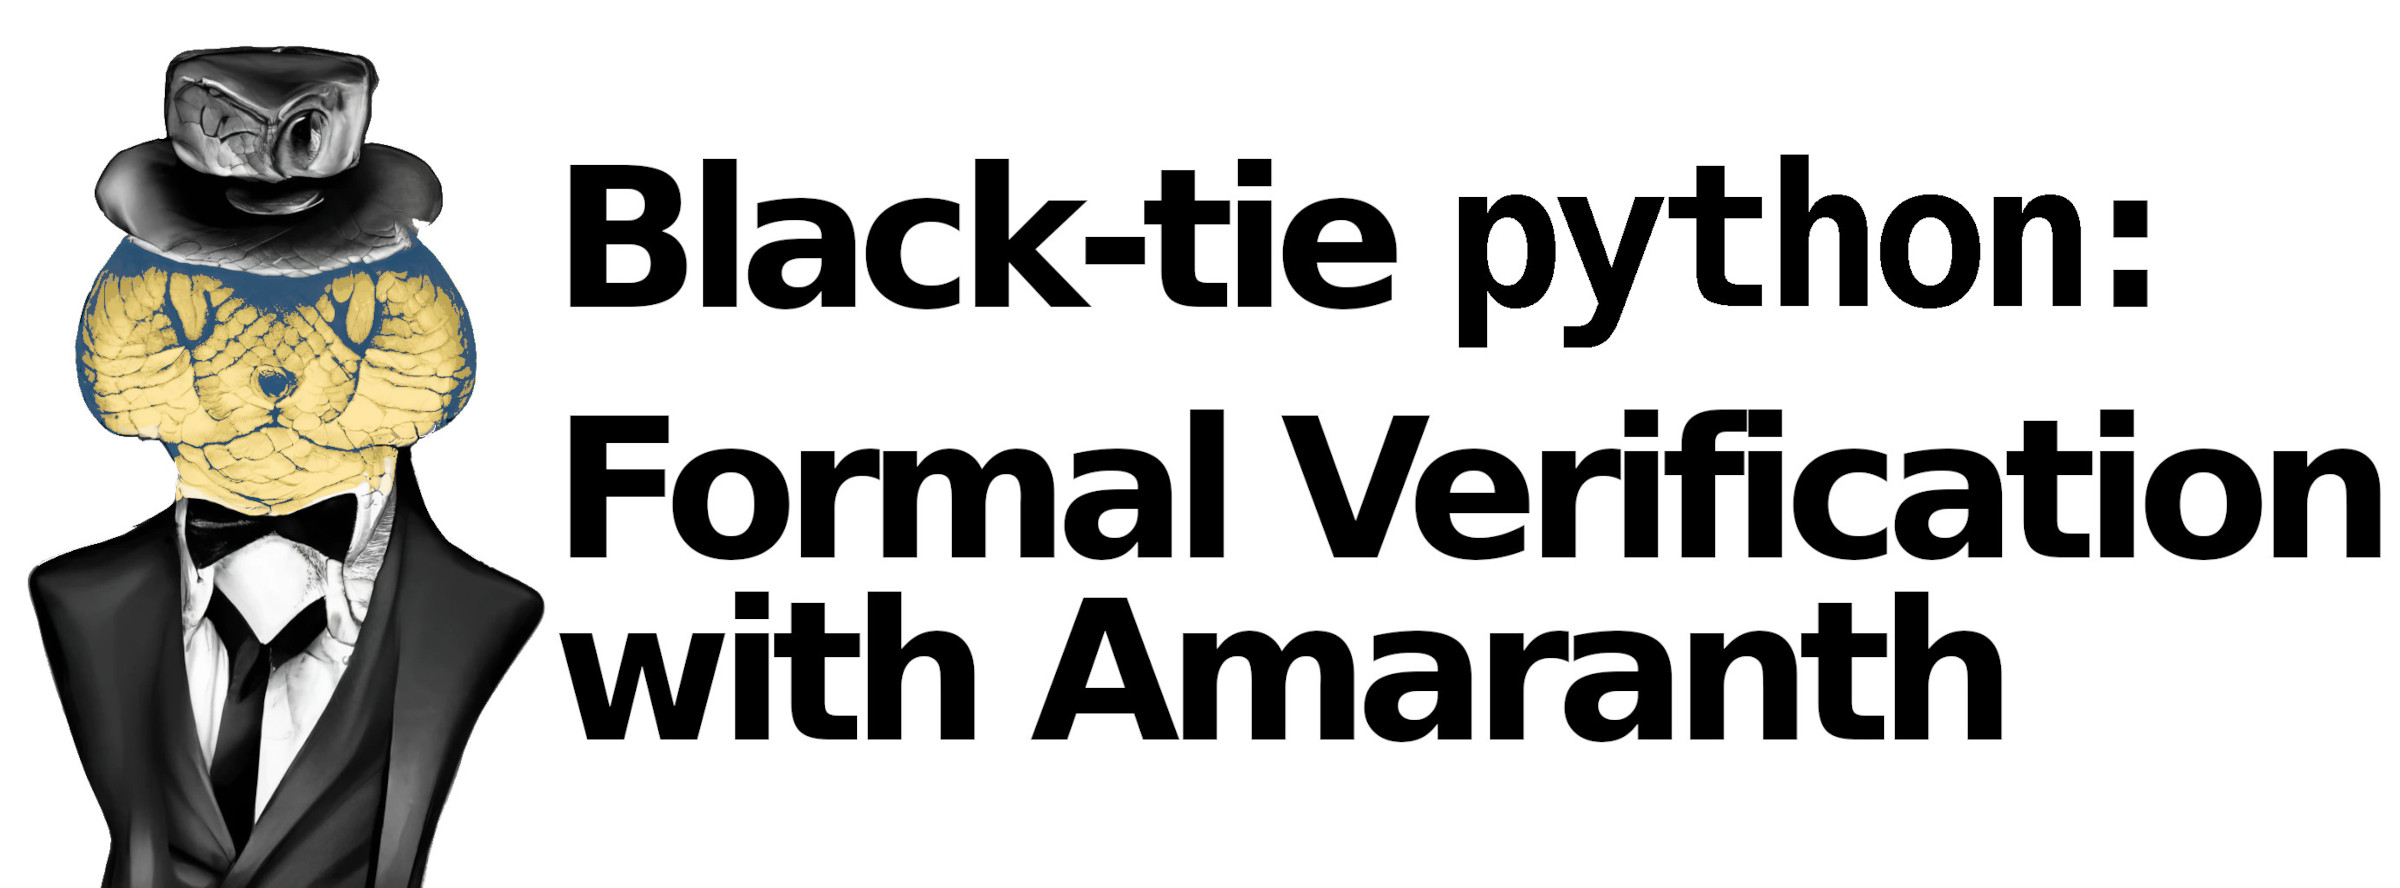 Black-tie Python: Formal Verification with Amaranth